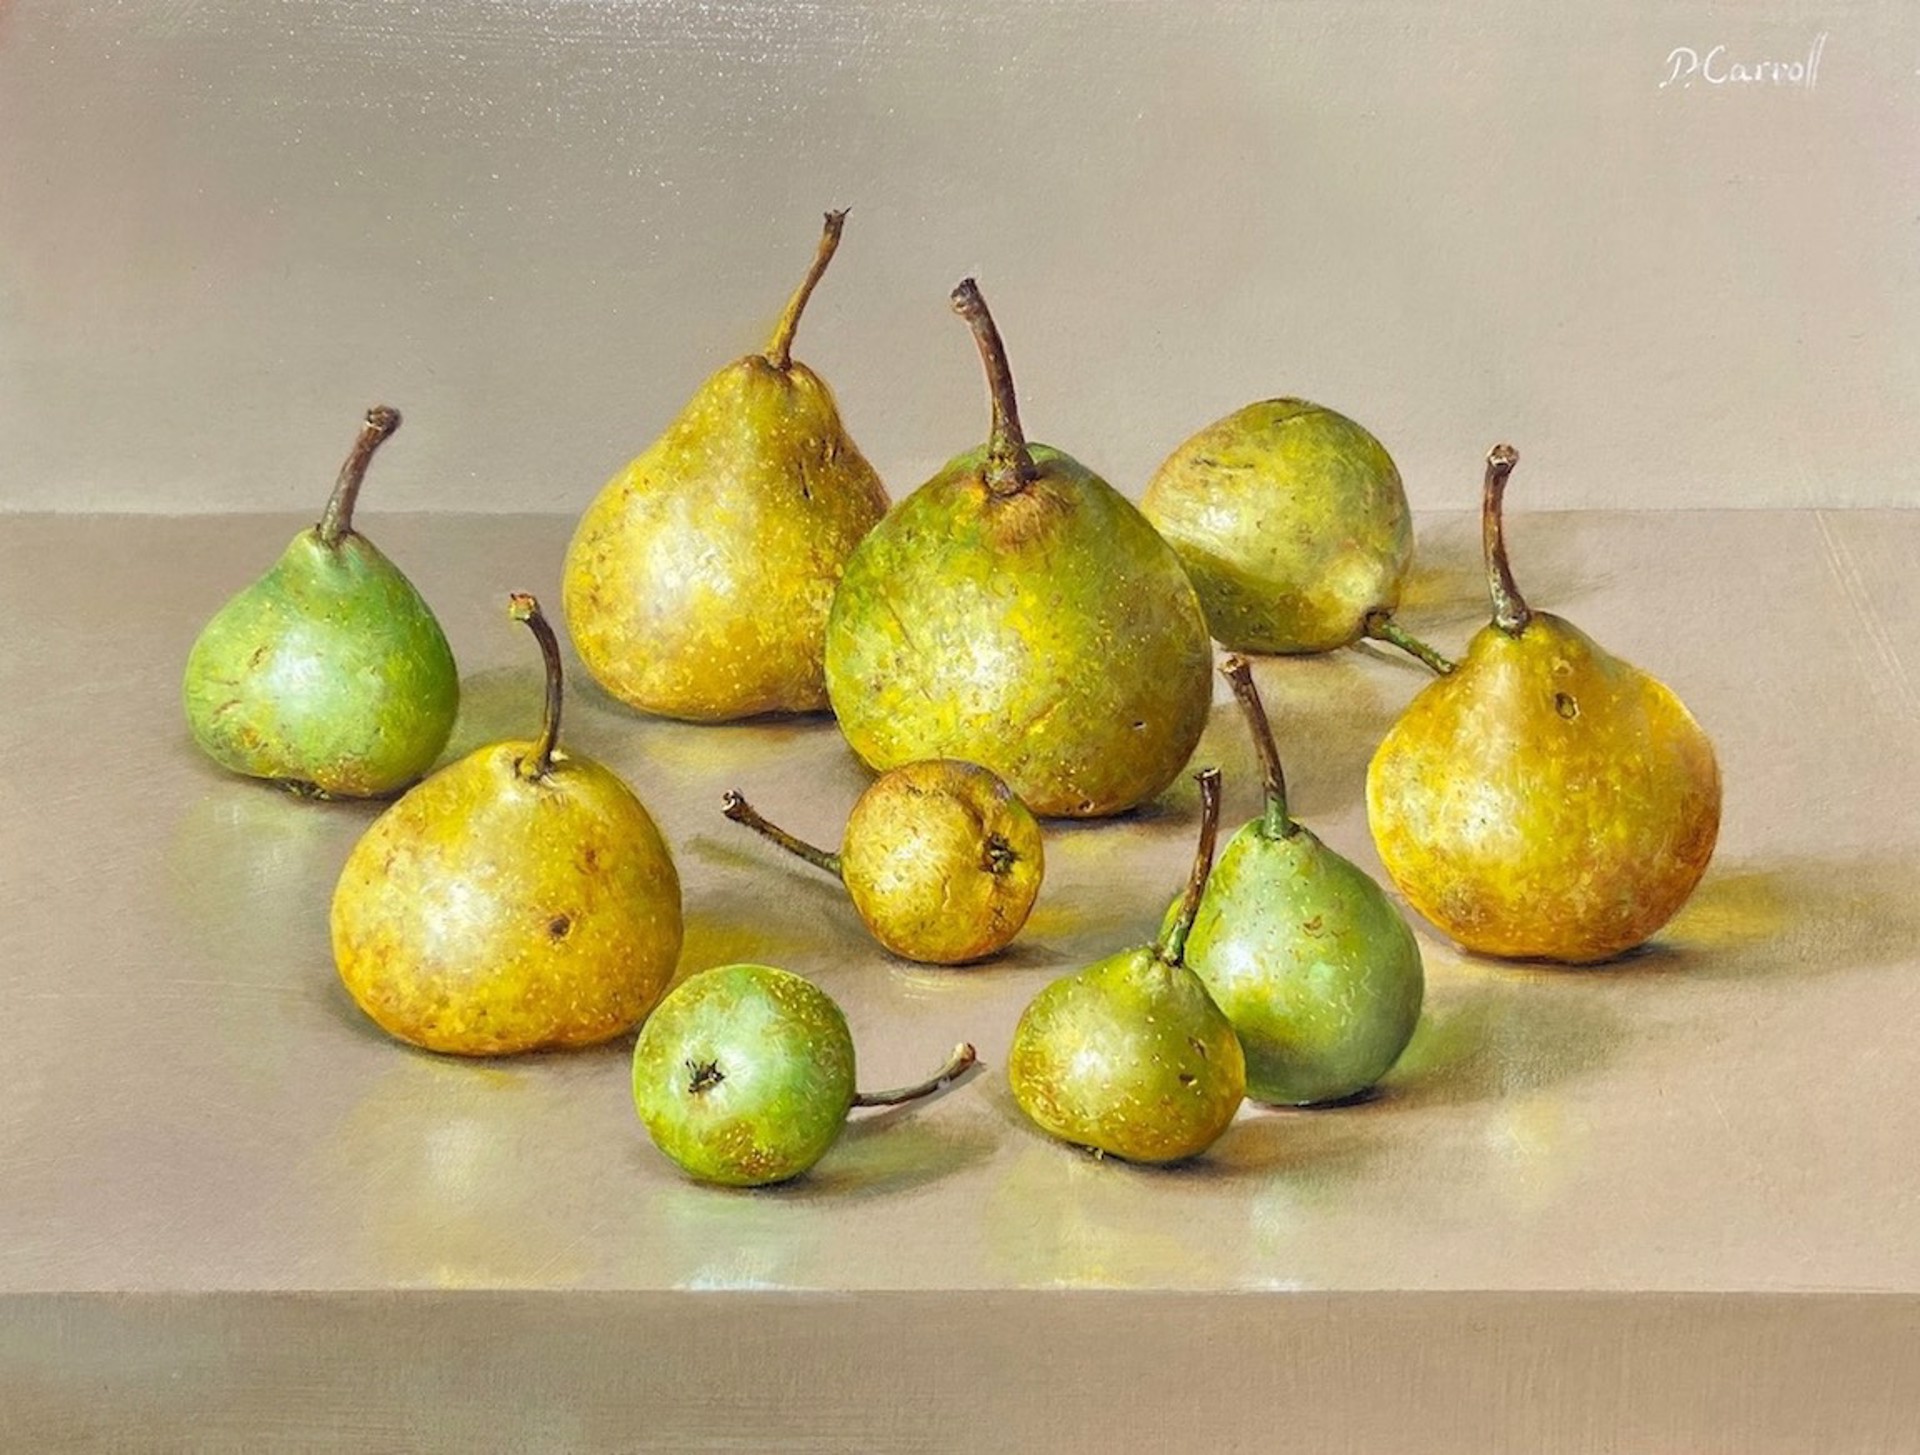 Pears from Del Mesa by Pamela Carroll